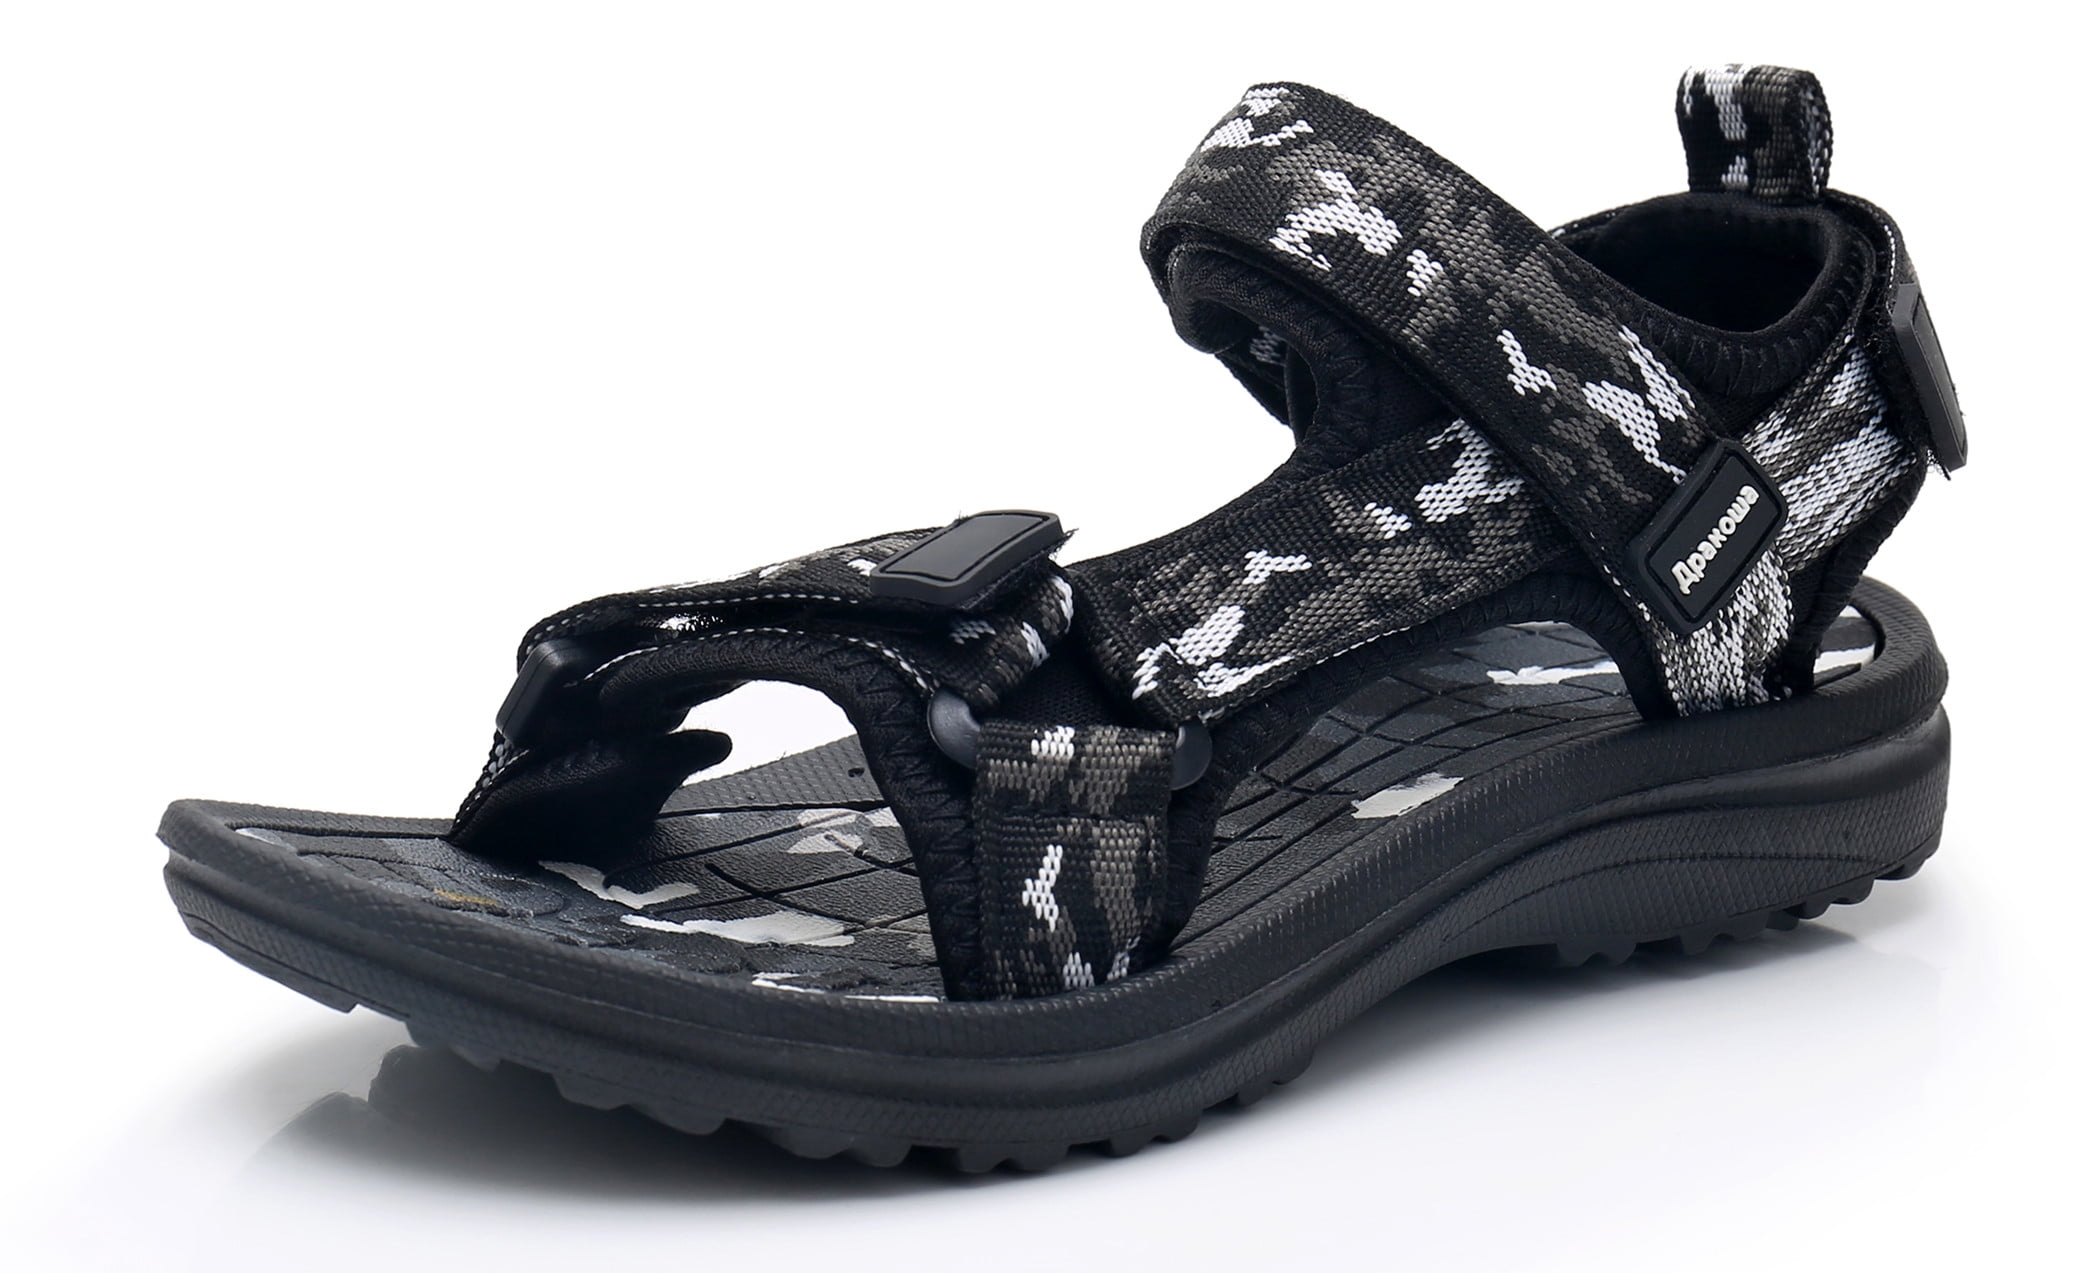 Apakowa Unisex Kids Boys Girls Outdoor Summer Sport Water Sandal Shoes ...